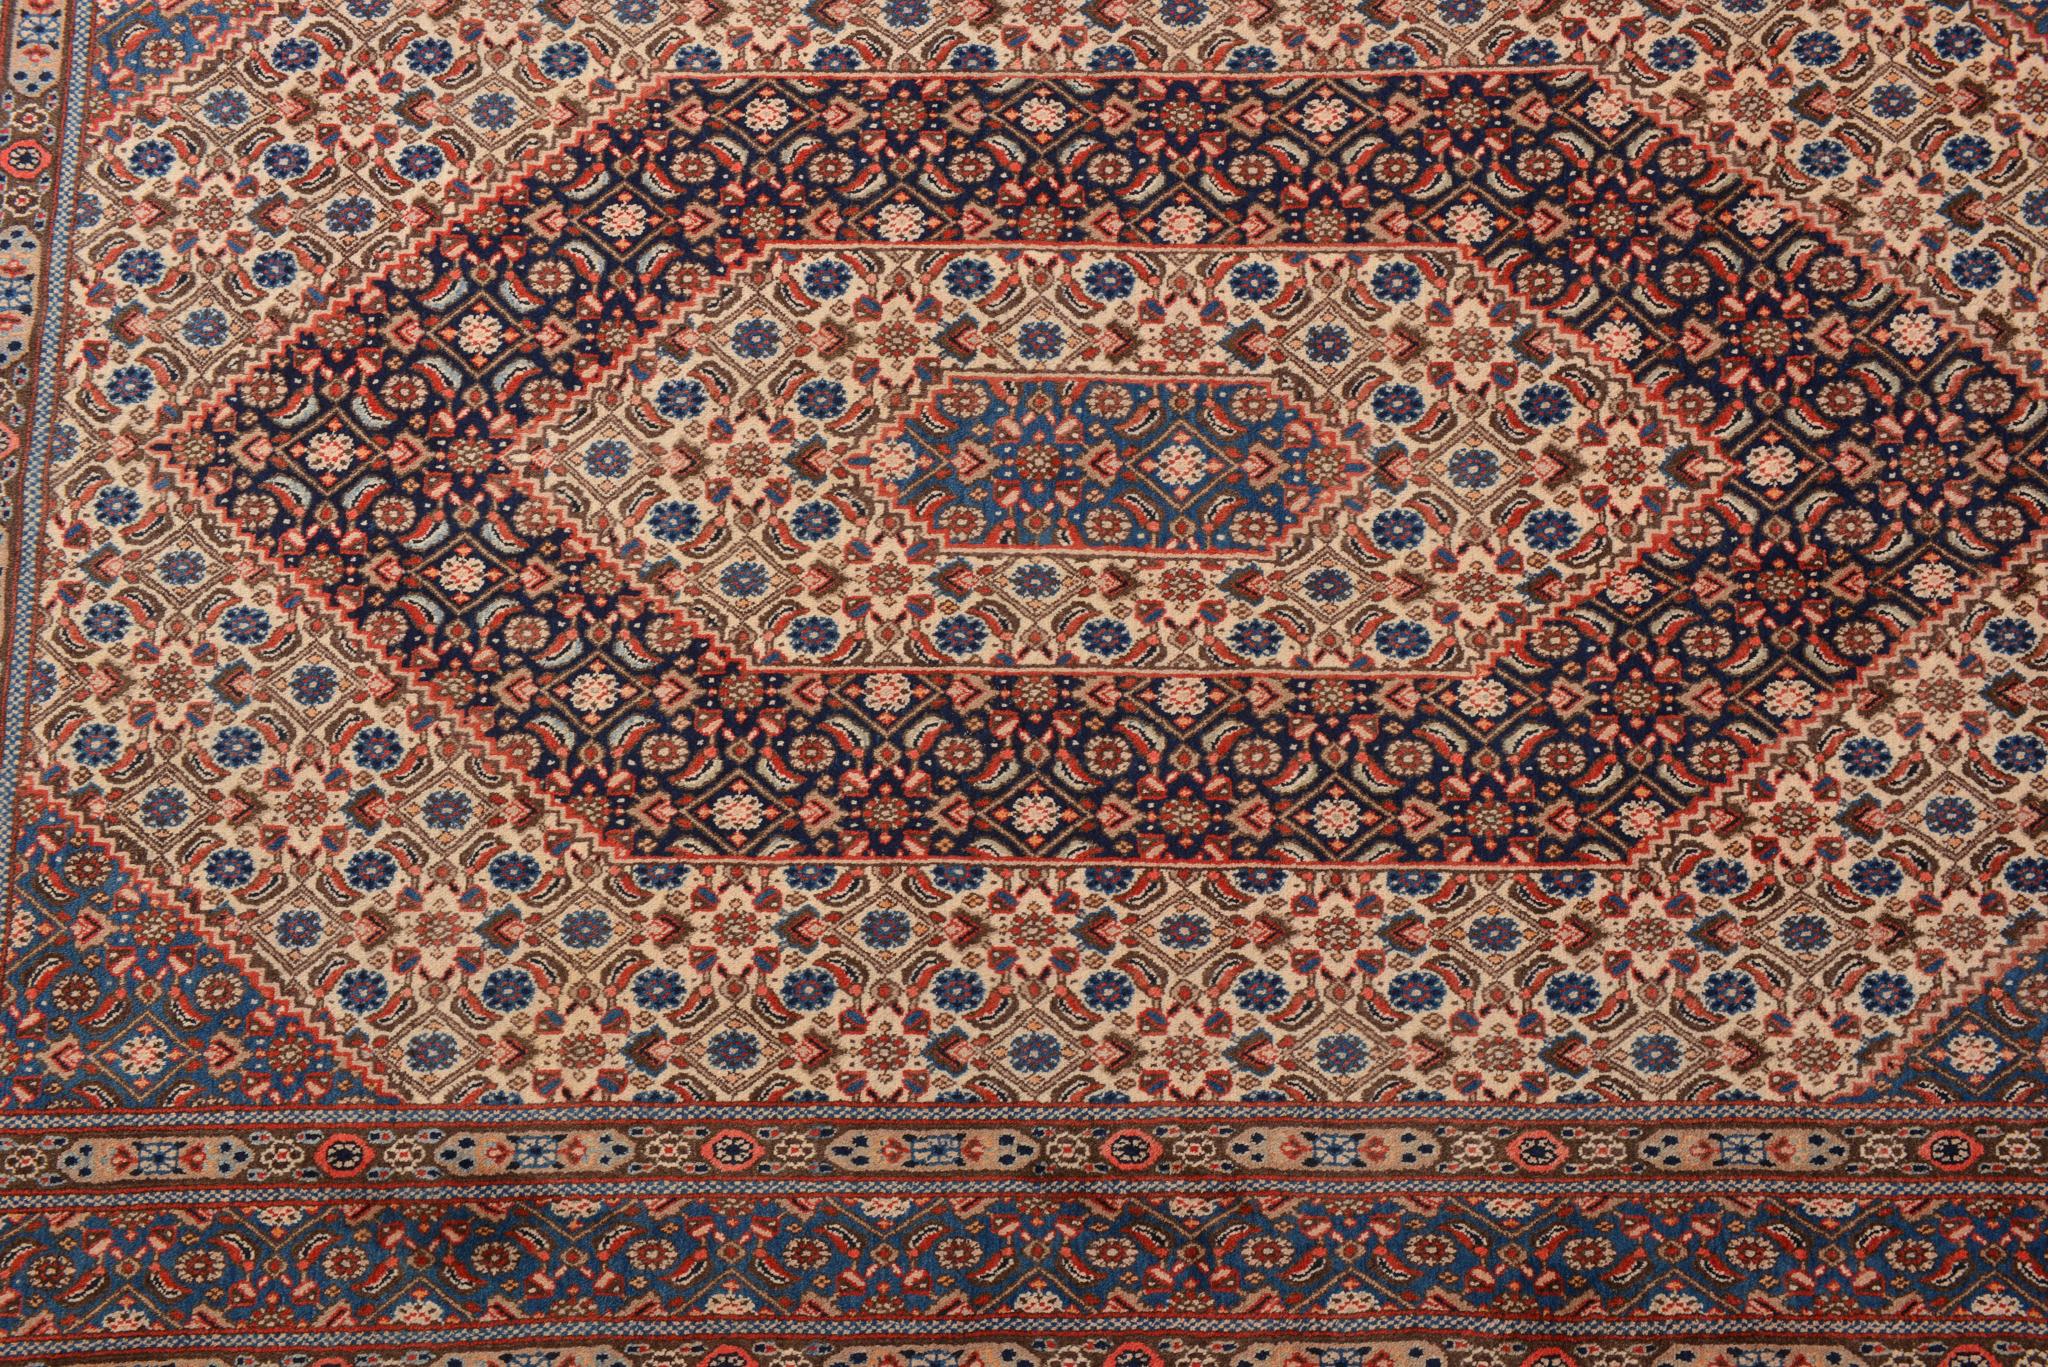 20th Century Modern Turkish Carpet For Sale